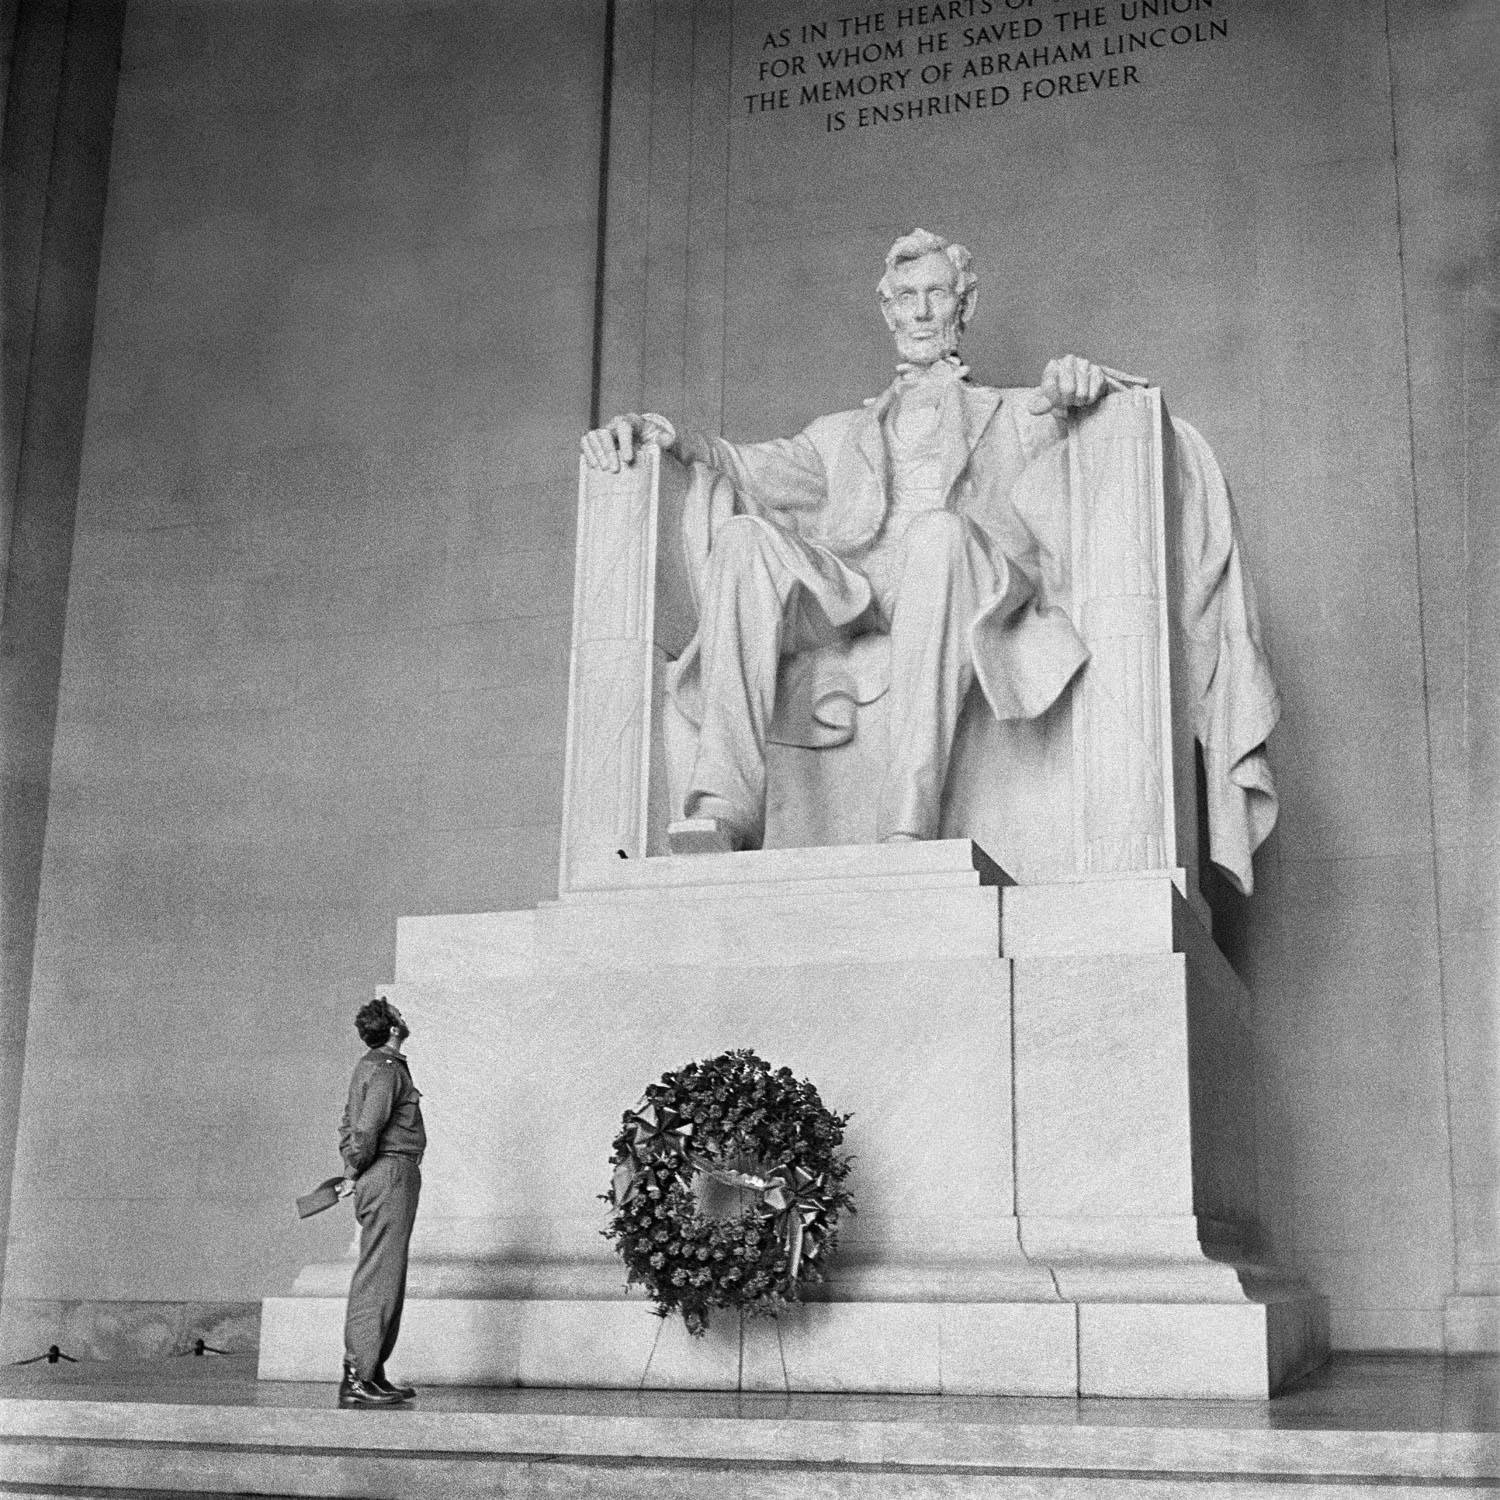 David & Goliath, Abraham Lincoln Memorial, Washington. Sunday, April 19, 1959